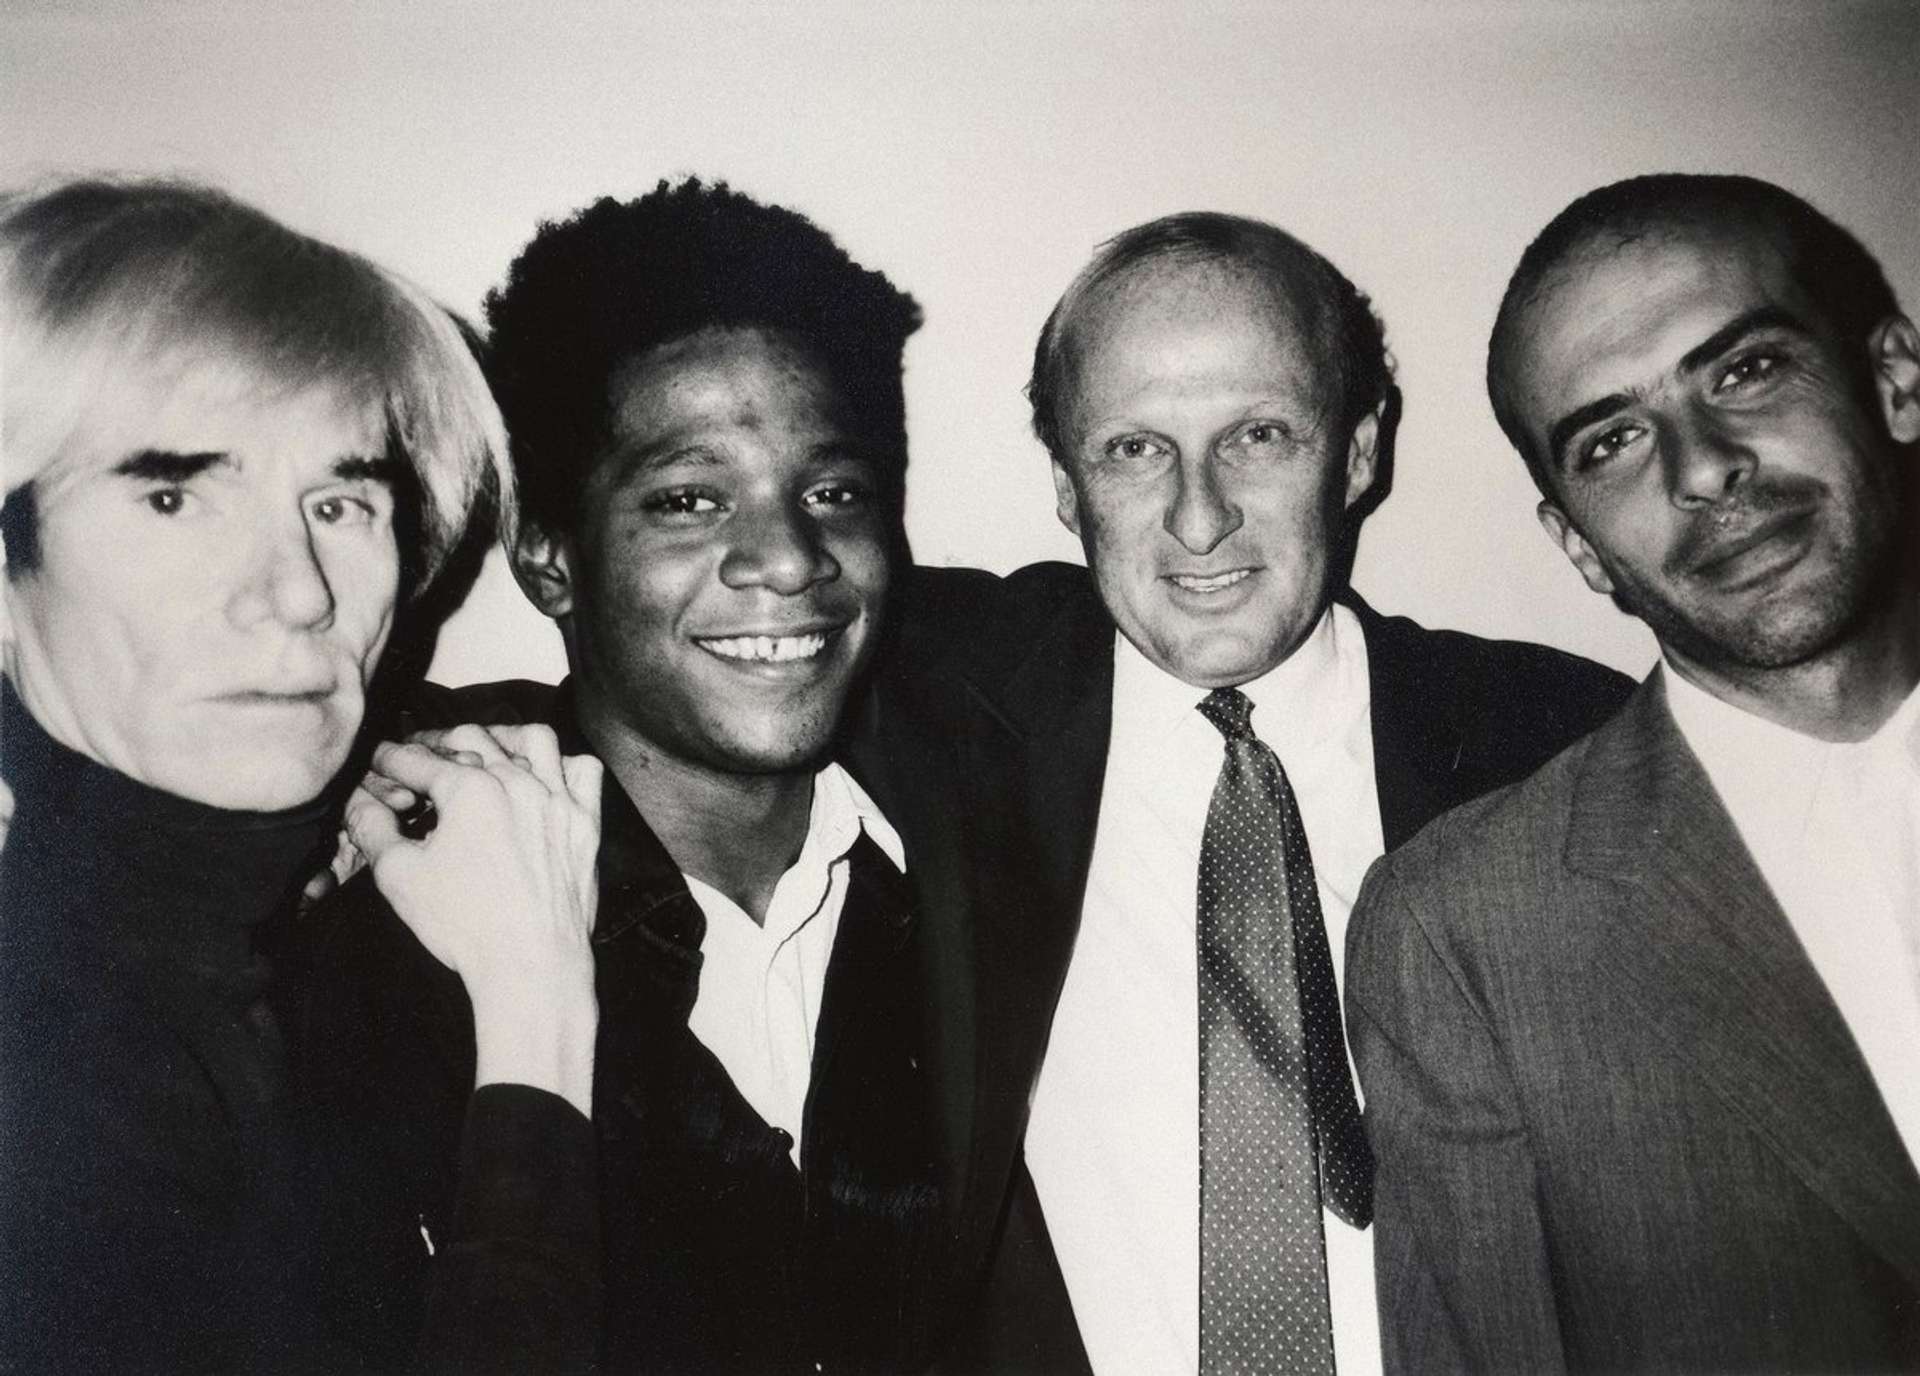 Andy Warhol, Jean-Michel Basquiat, Bruno Bischofberger and Fransesco Clemente, New York, 1984